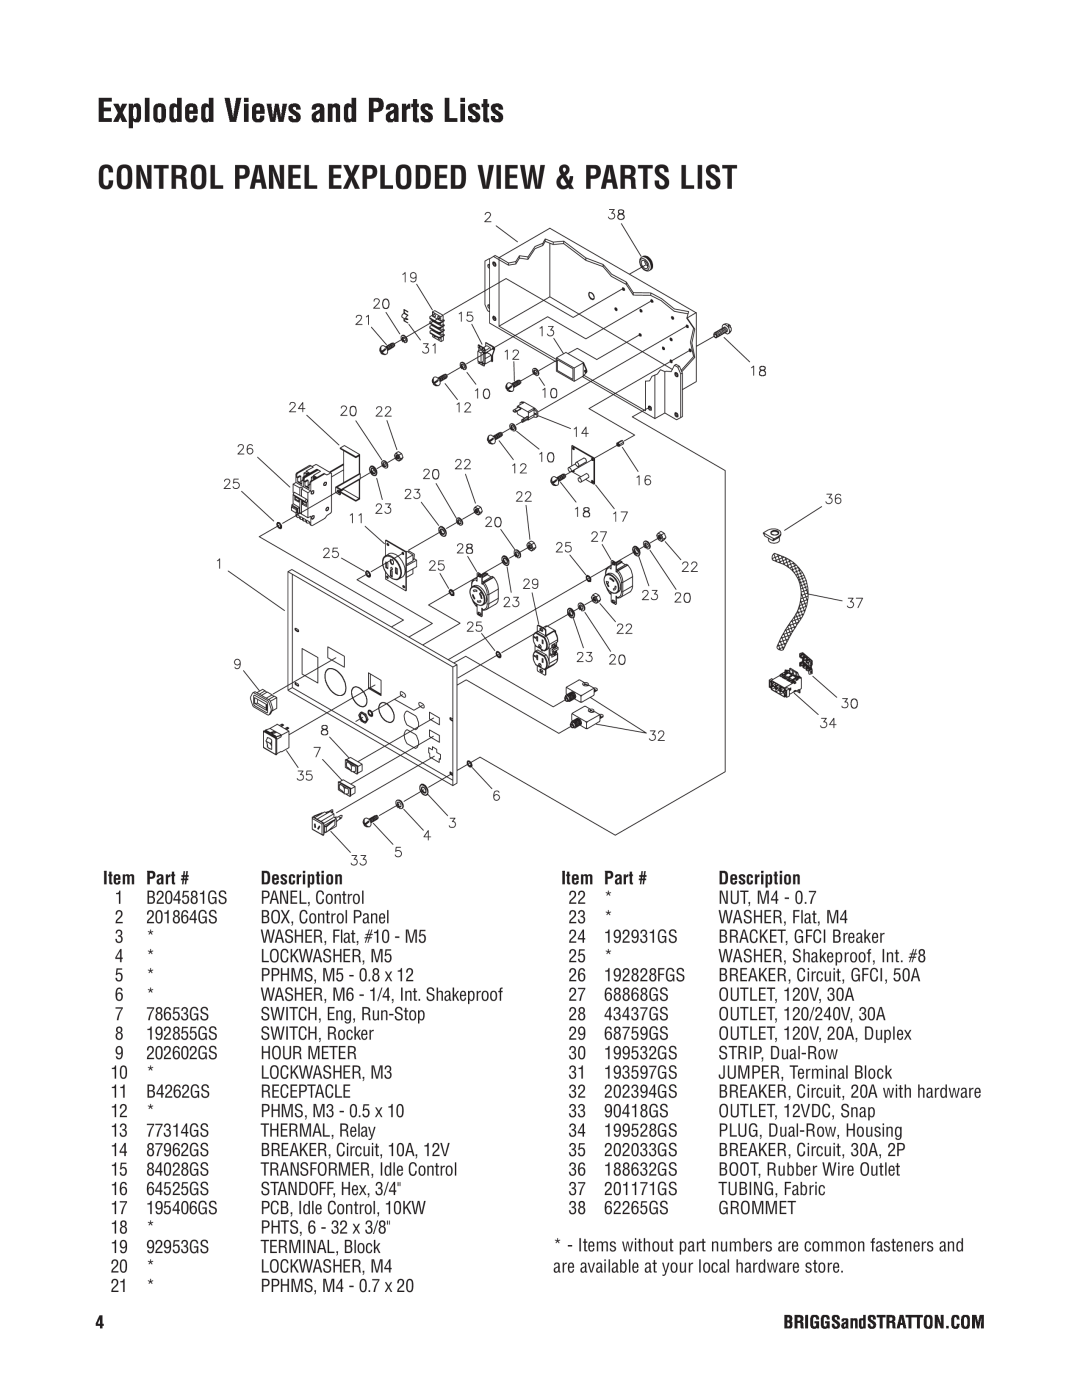 Briggs & Stratton PRO 10000 manual Control Panel Exploded View & Parts List, Exploded Views and Parts Lists, Item, Part # 